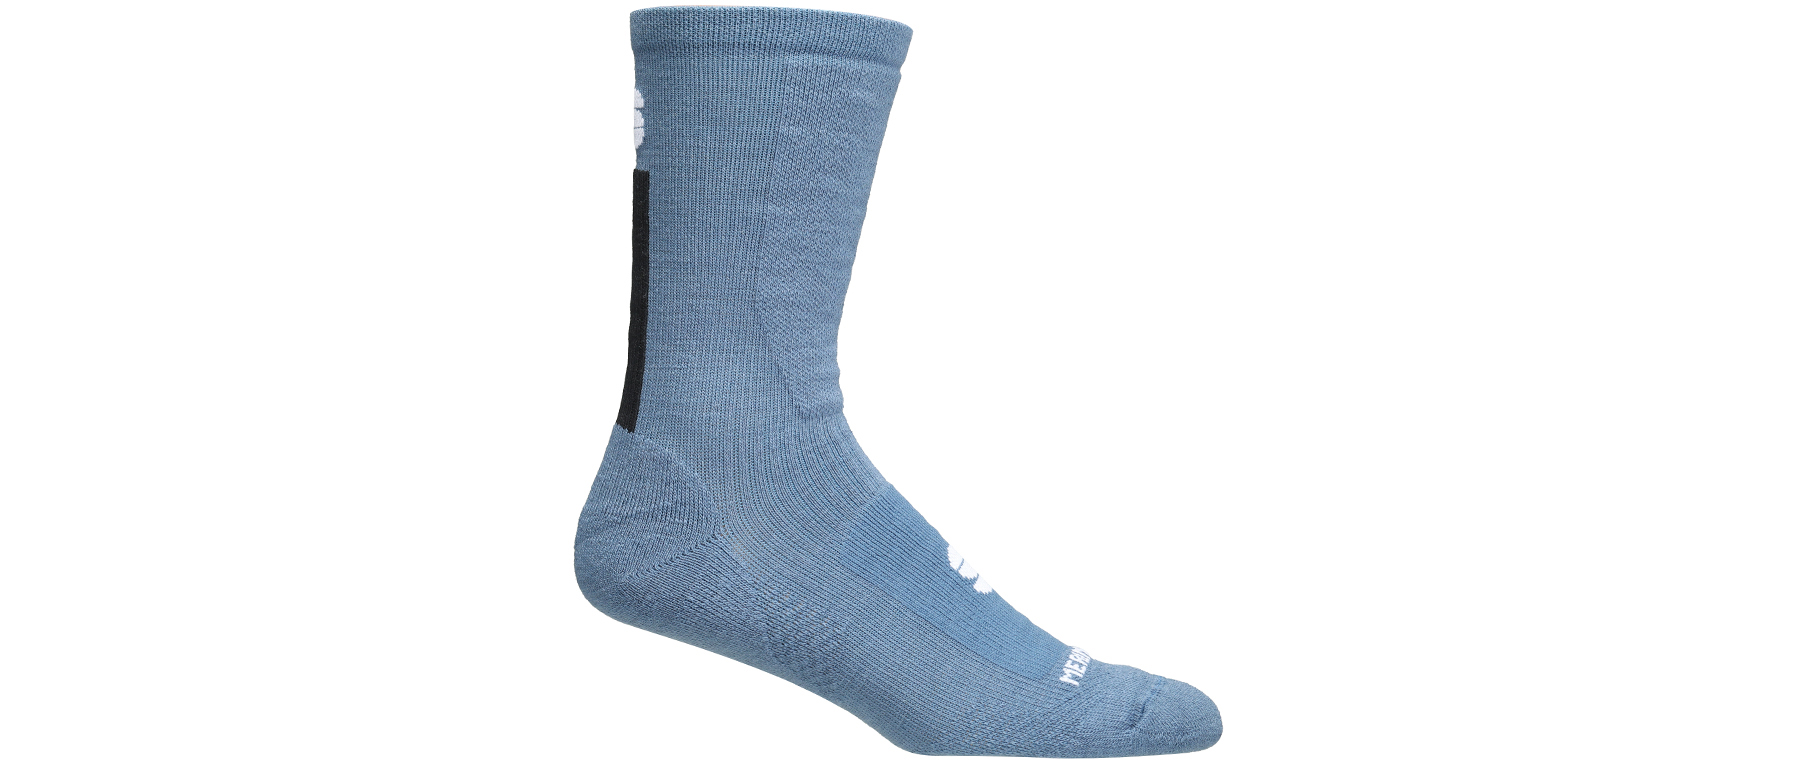 Sportful Merino Wool 18 Sock SAMPLE